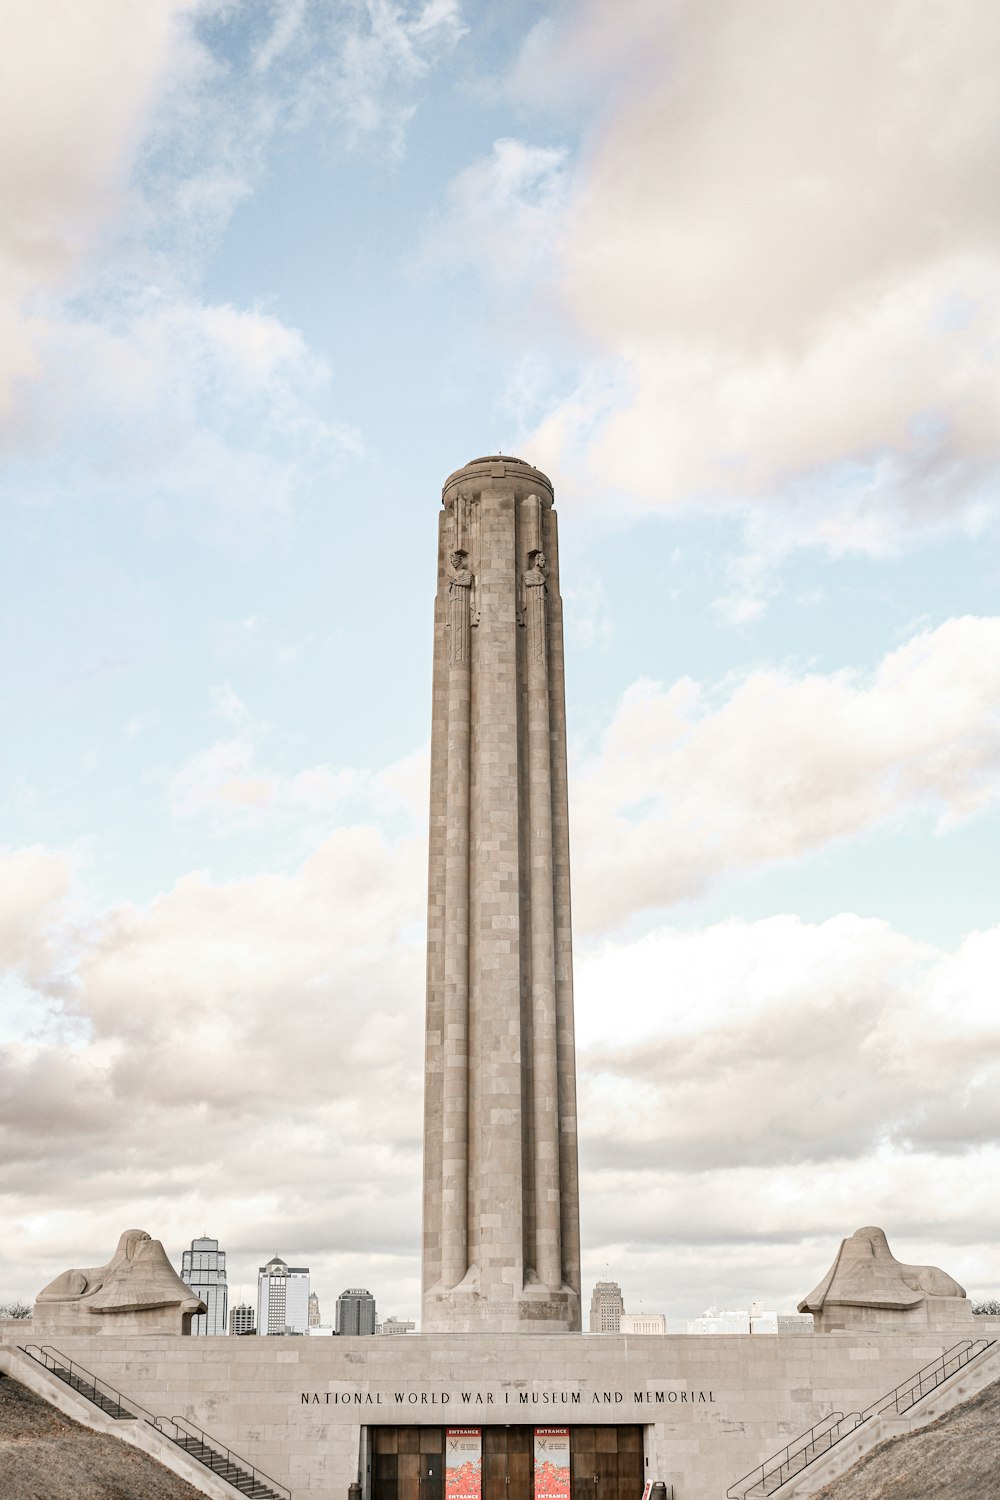 gray concrete pillar under blue sky during daytime